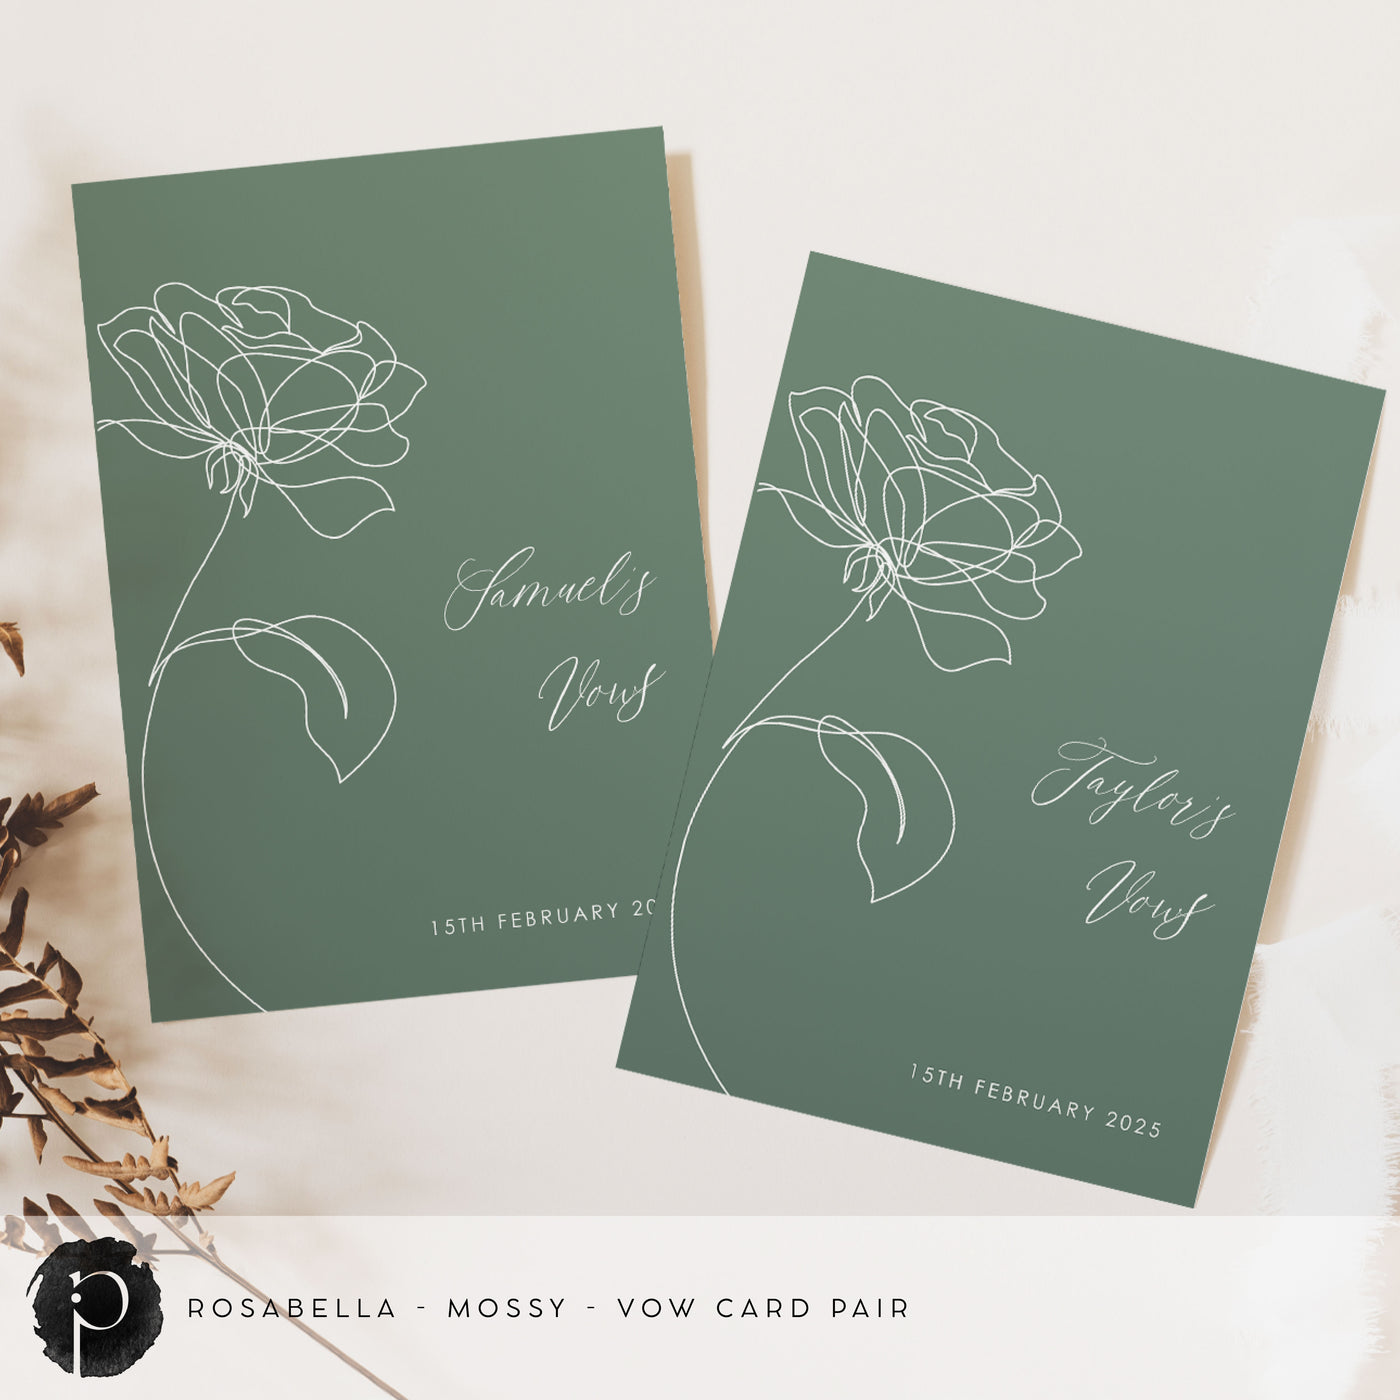 Rosabella - Wedding Vow Card Set